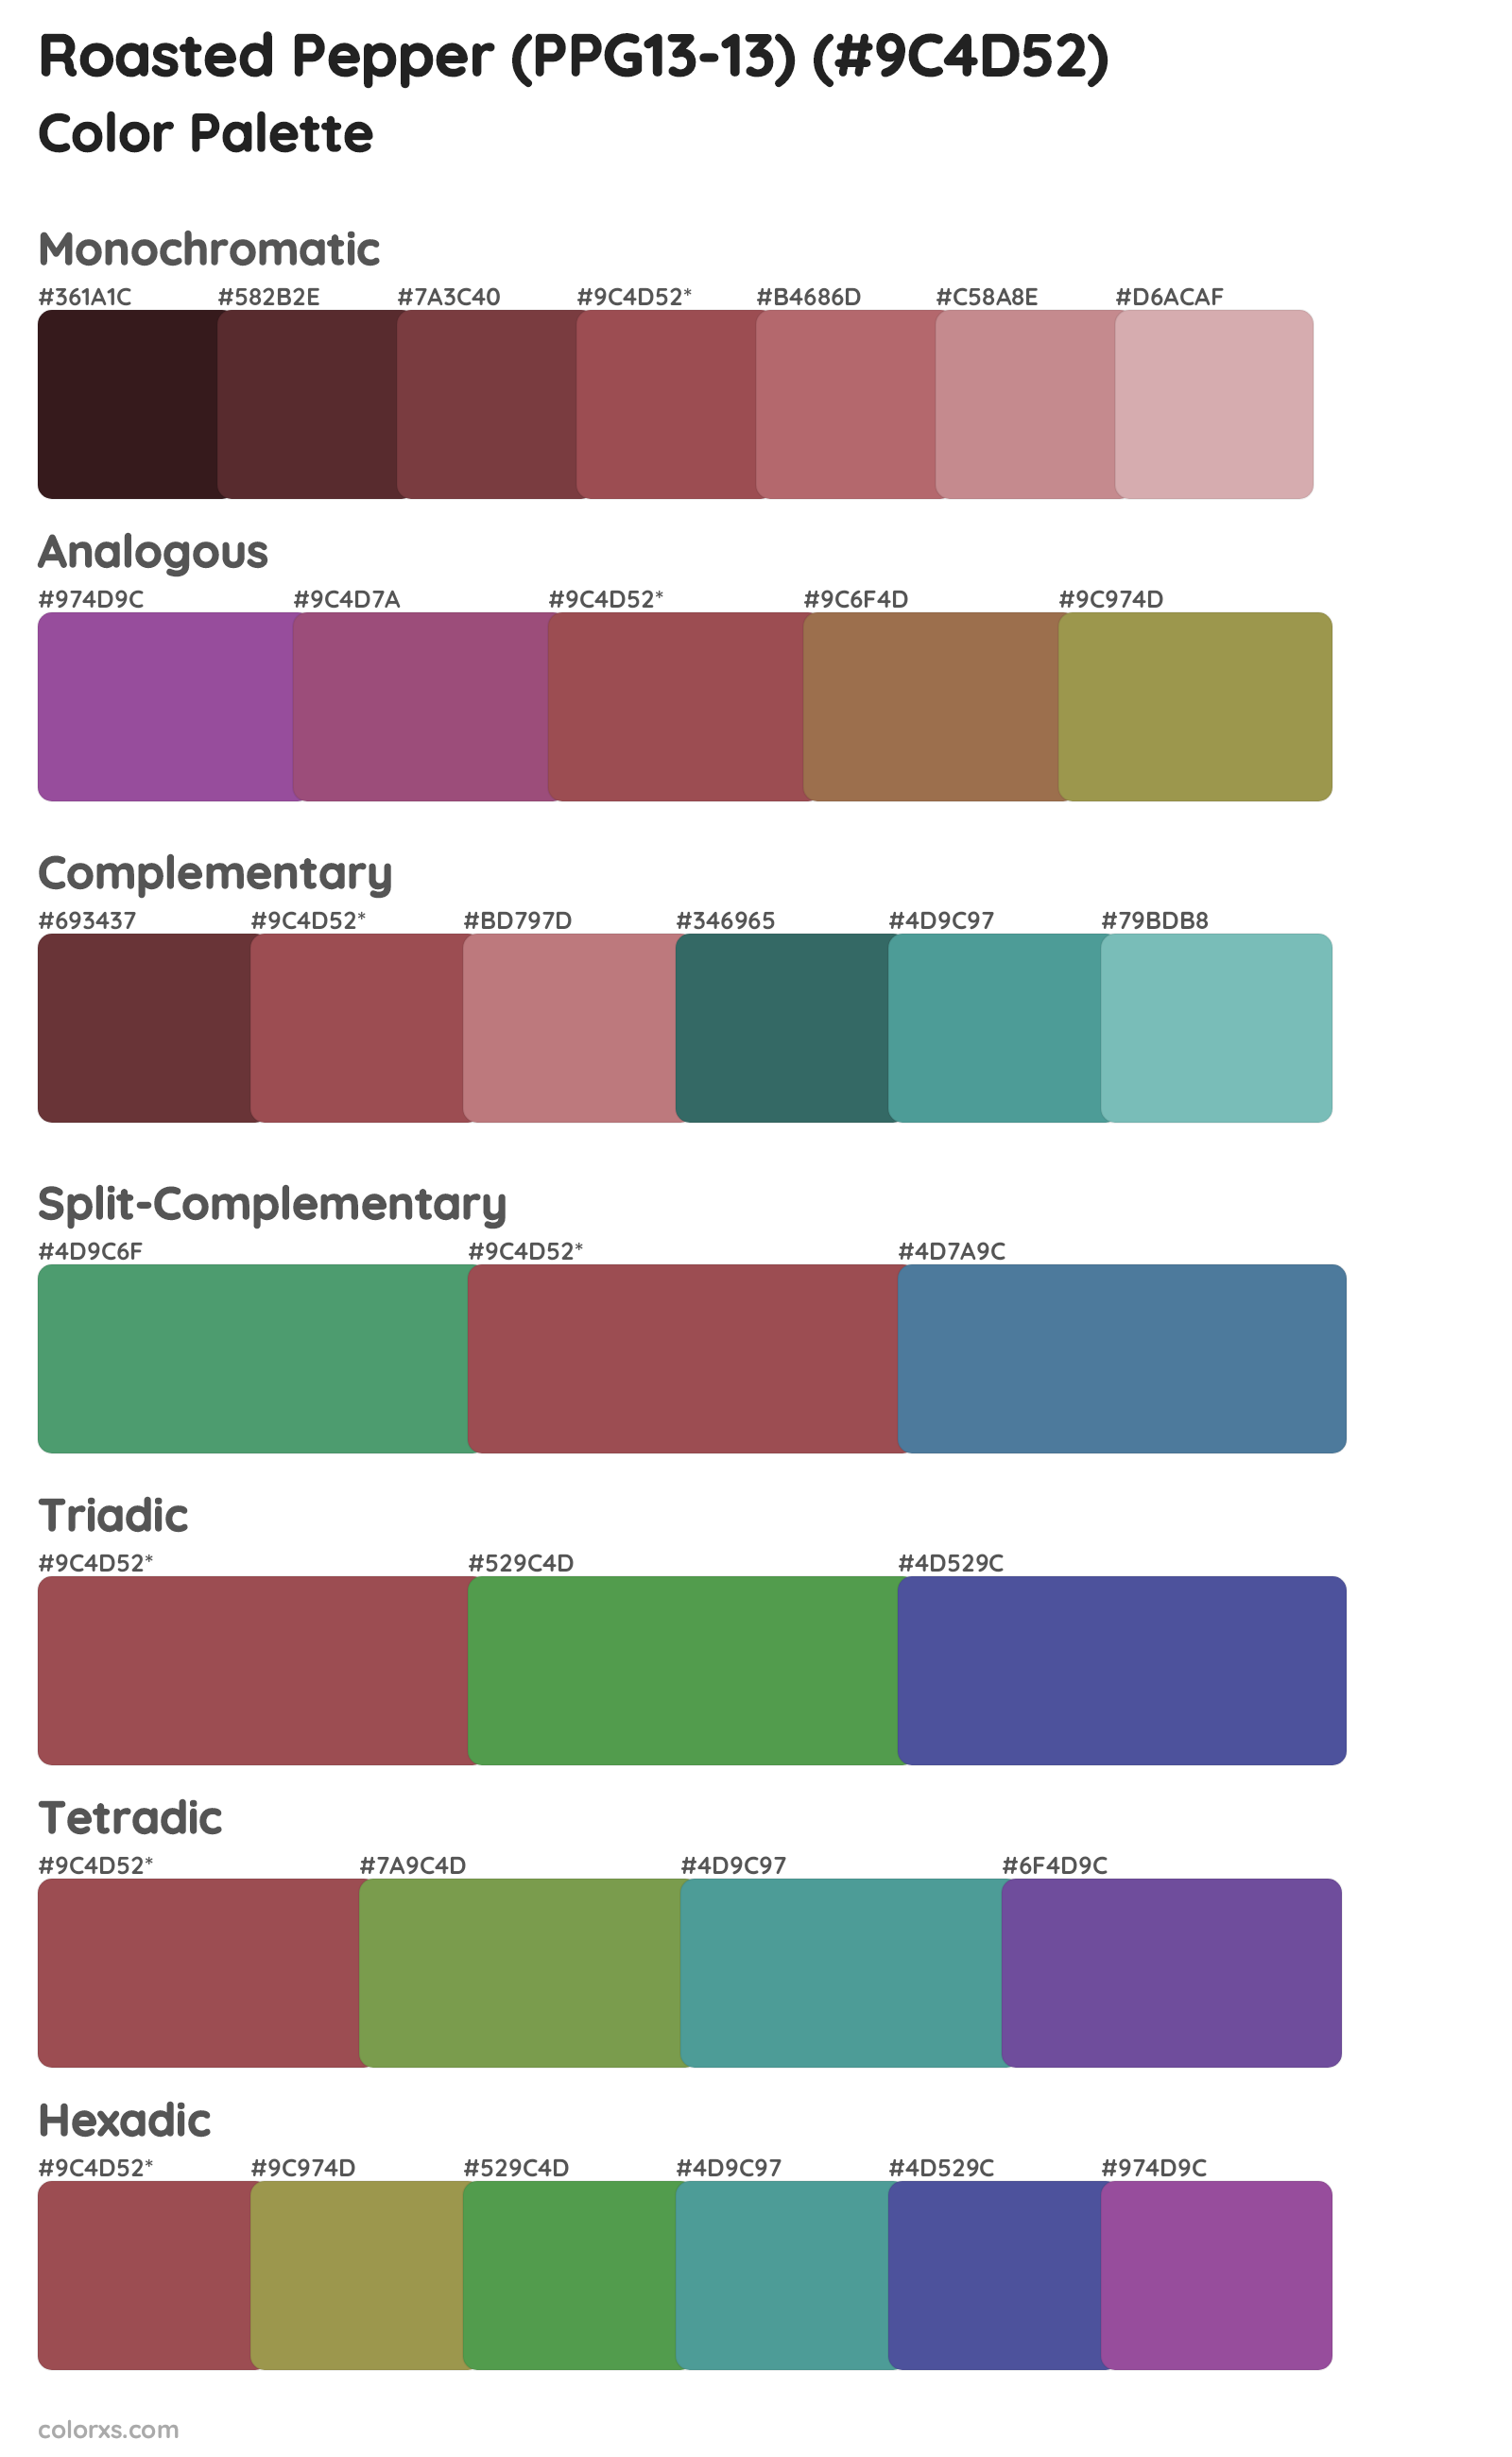 Roasted Pepper (PPG13-13) Color Scheme Palettes